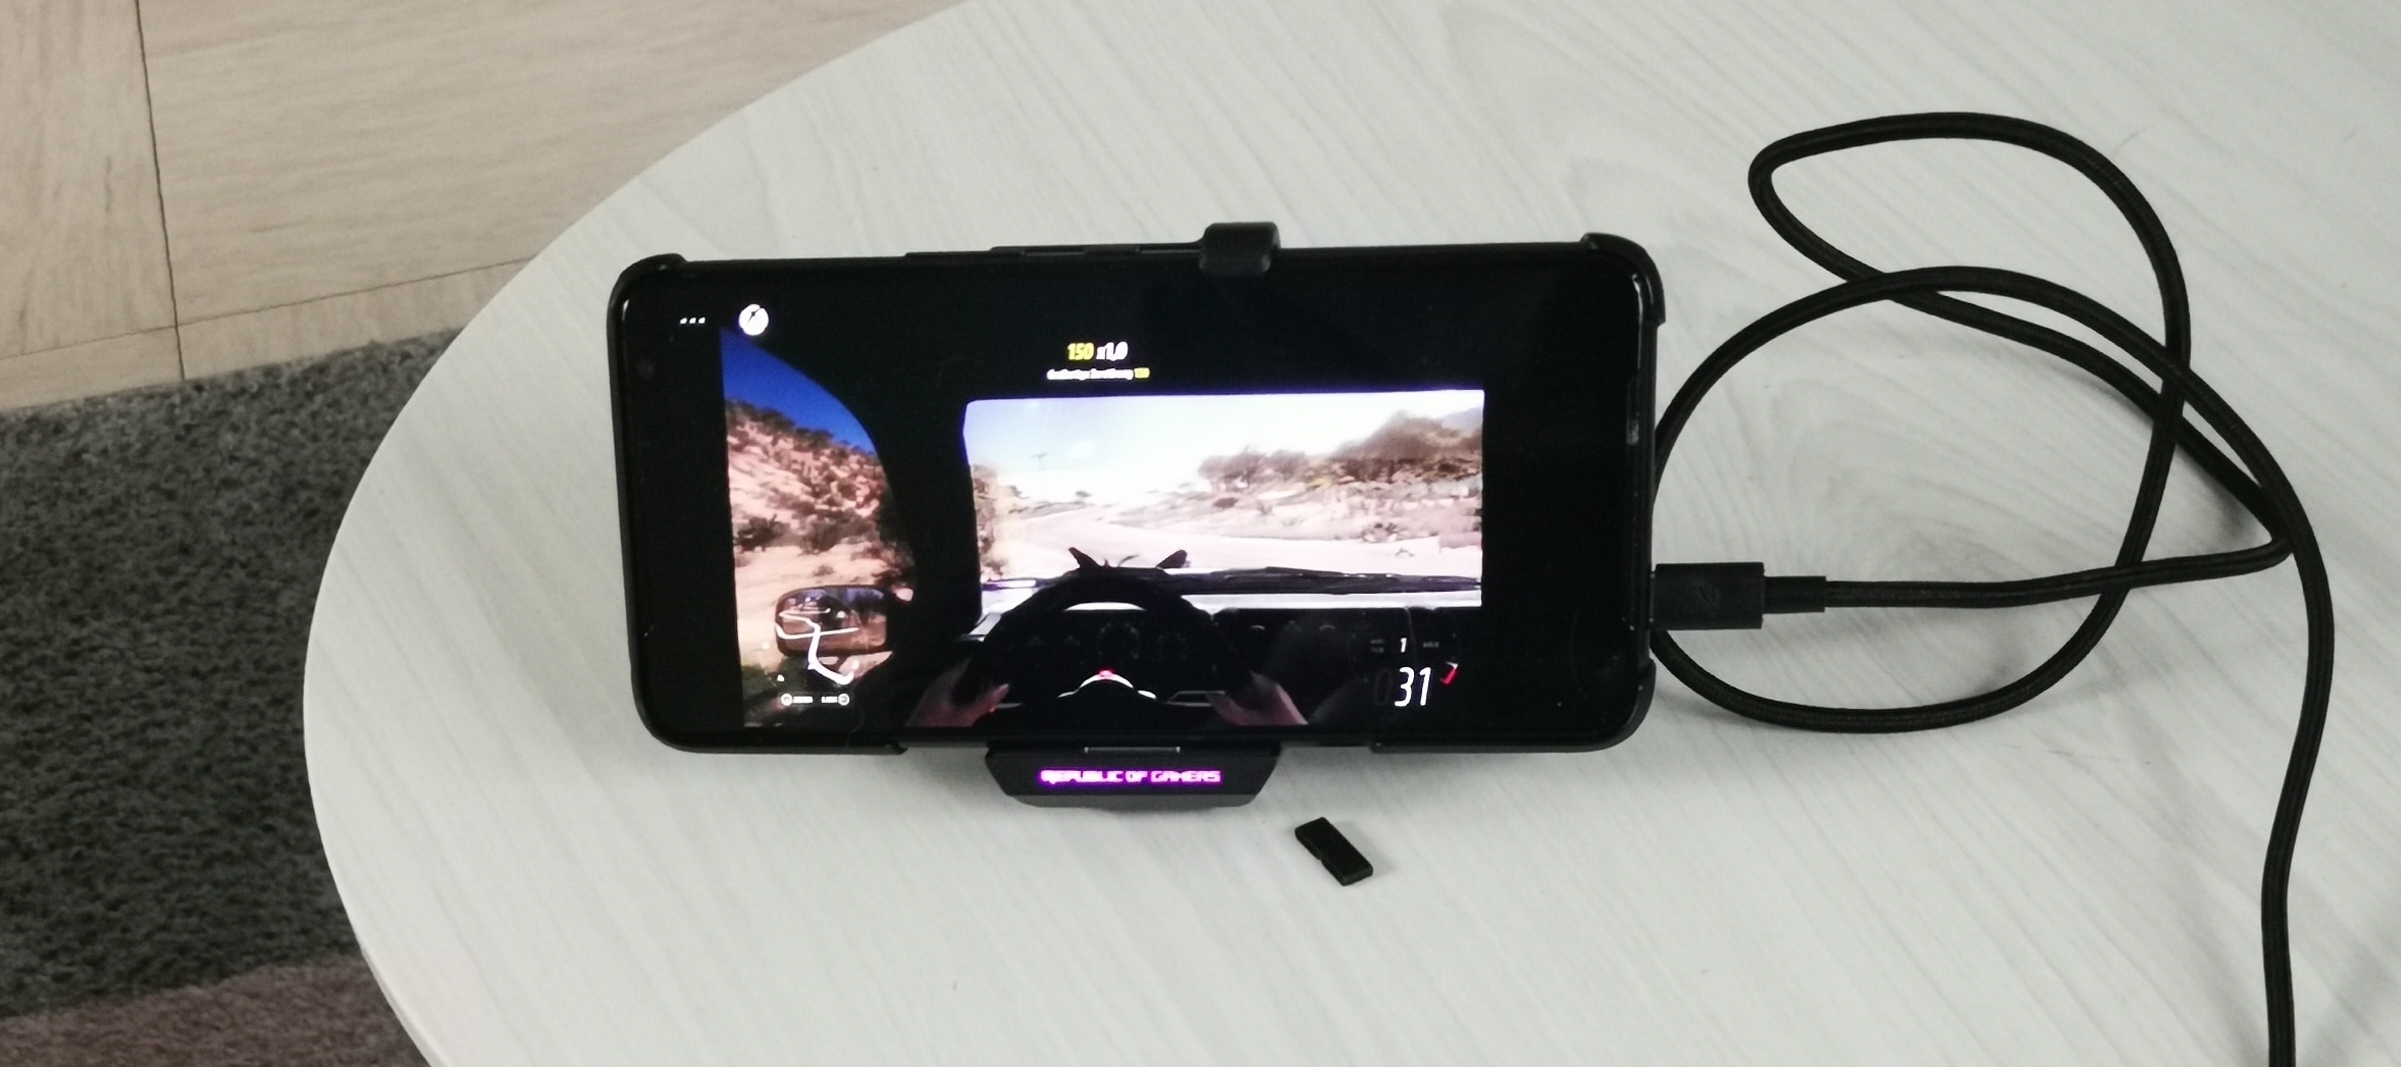 ASUS ROG PHONE 3 - Gaming Laptop in Taschenformat!?